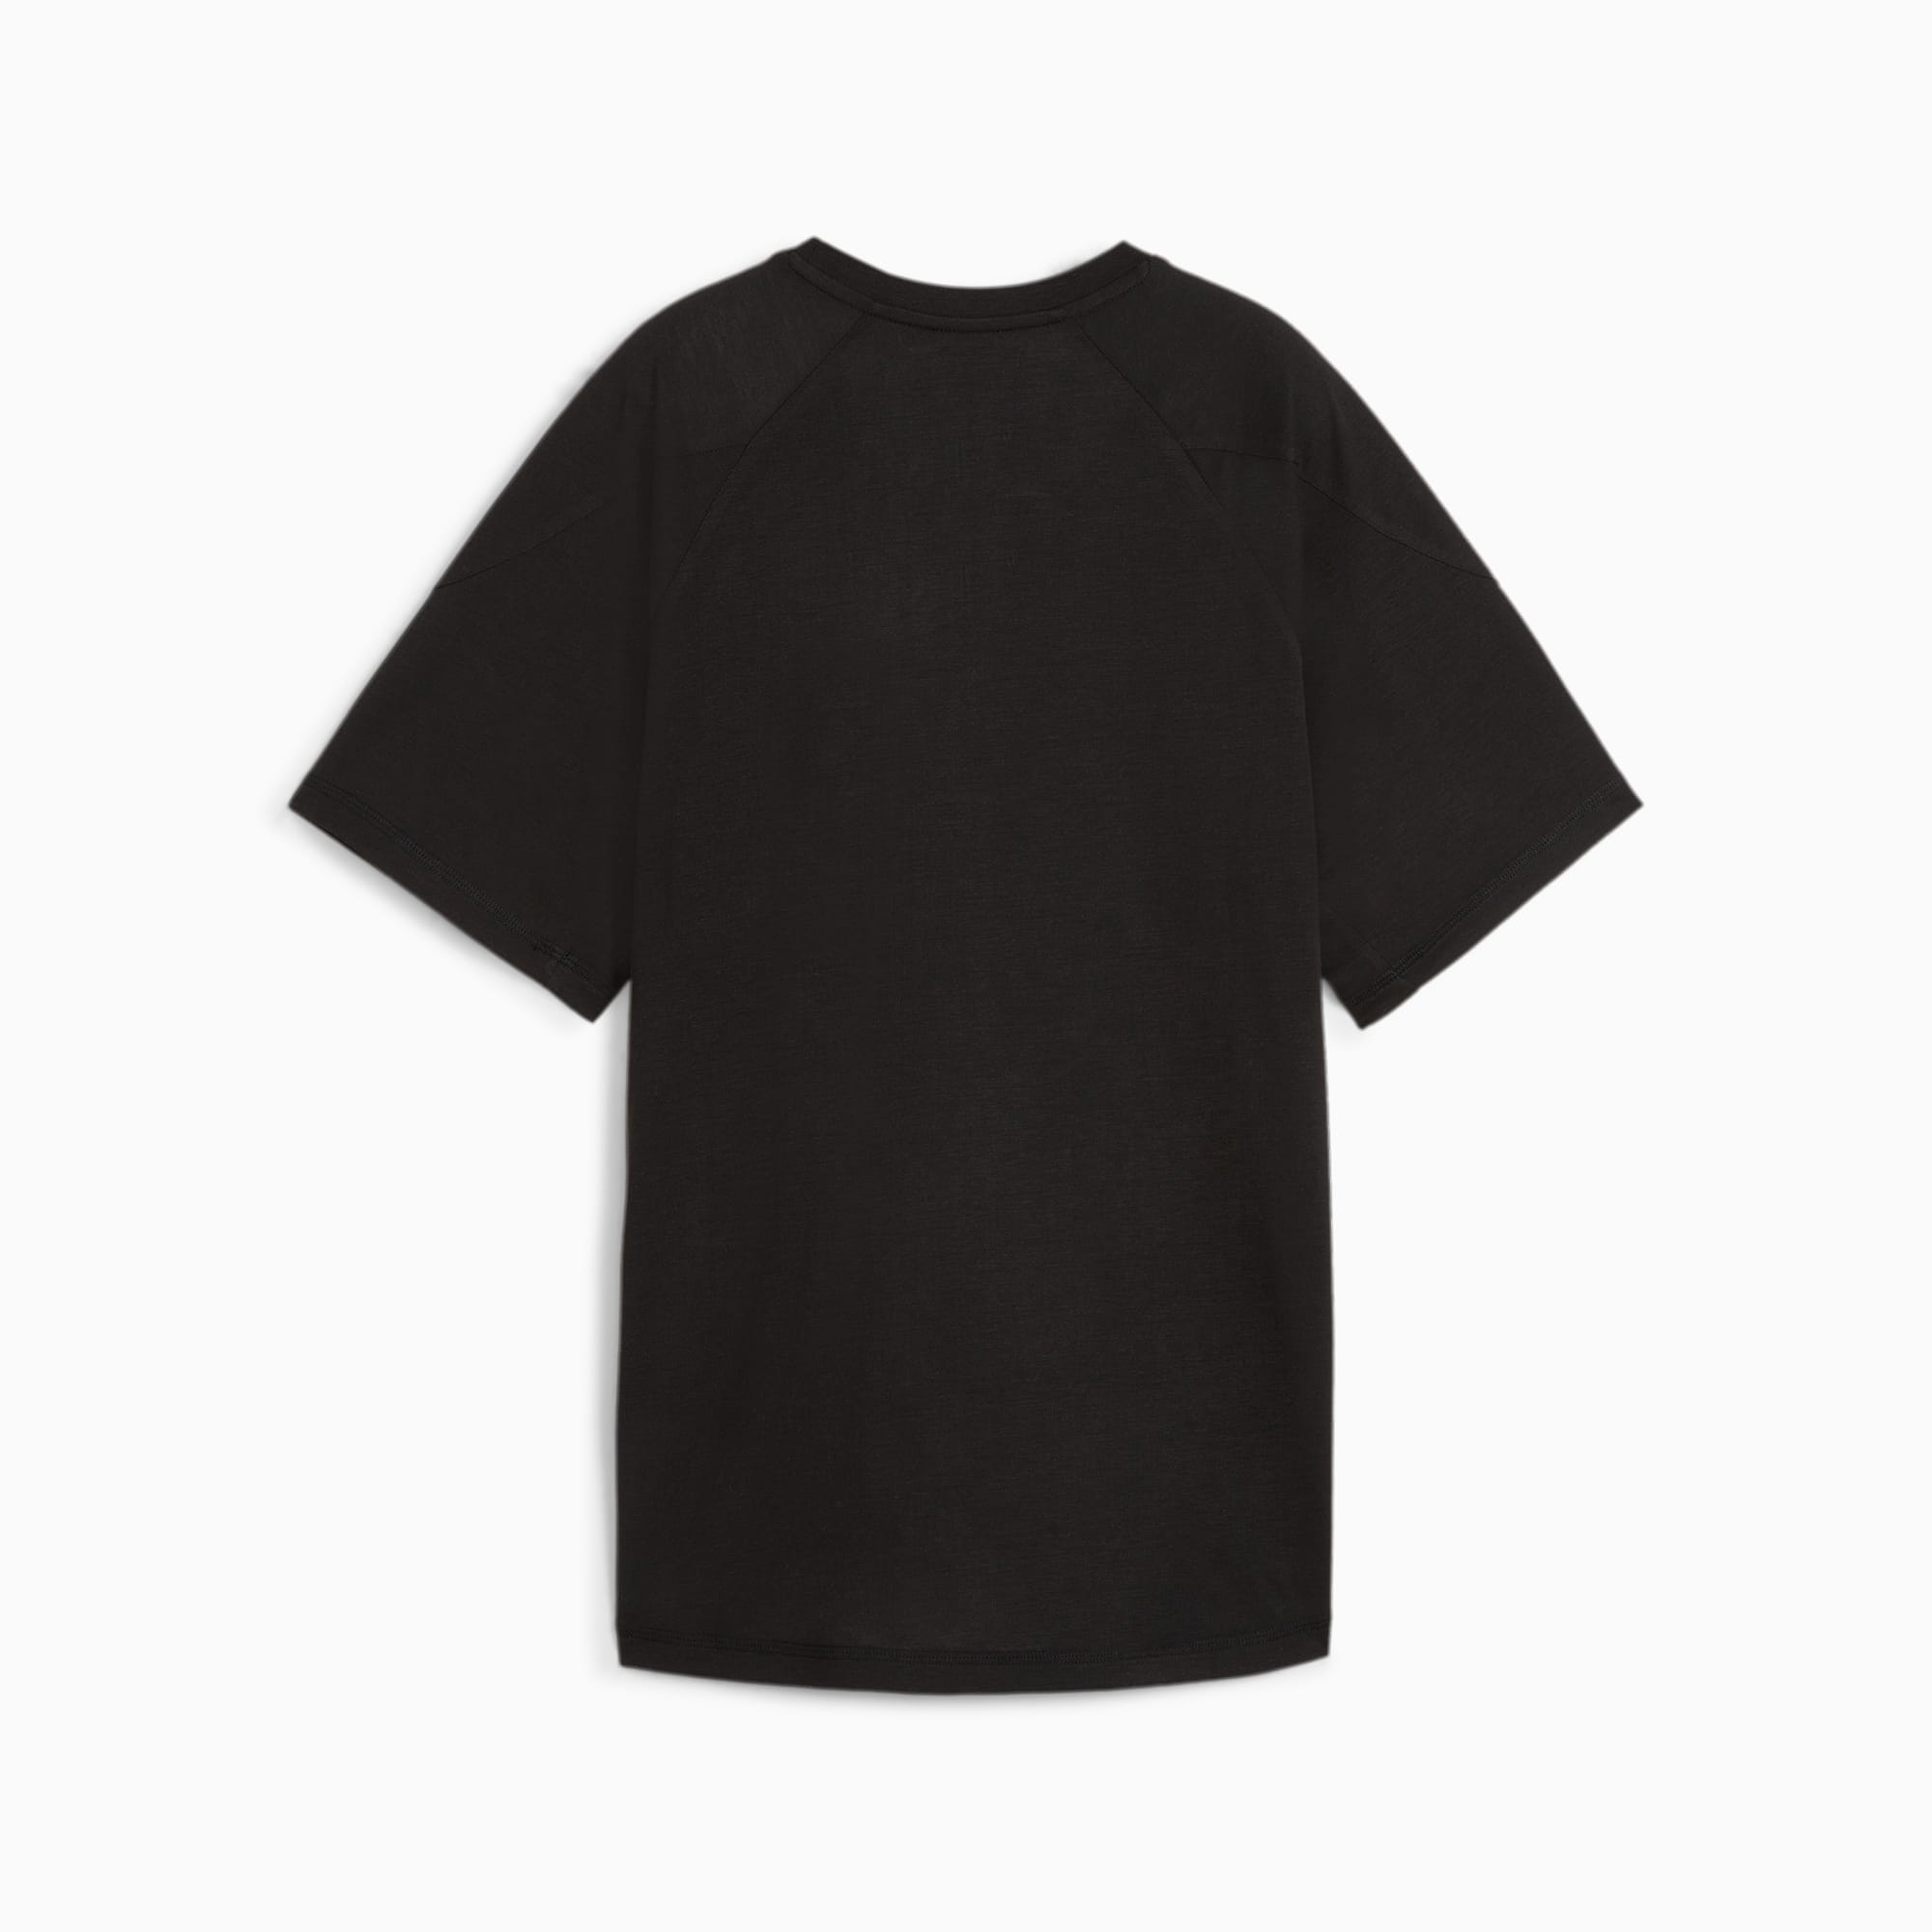 PUMA Evostripe Women's Graphic T-Shirt, Black, Size L, Clothing